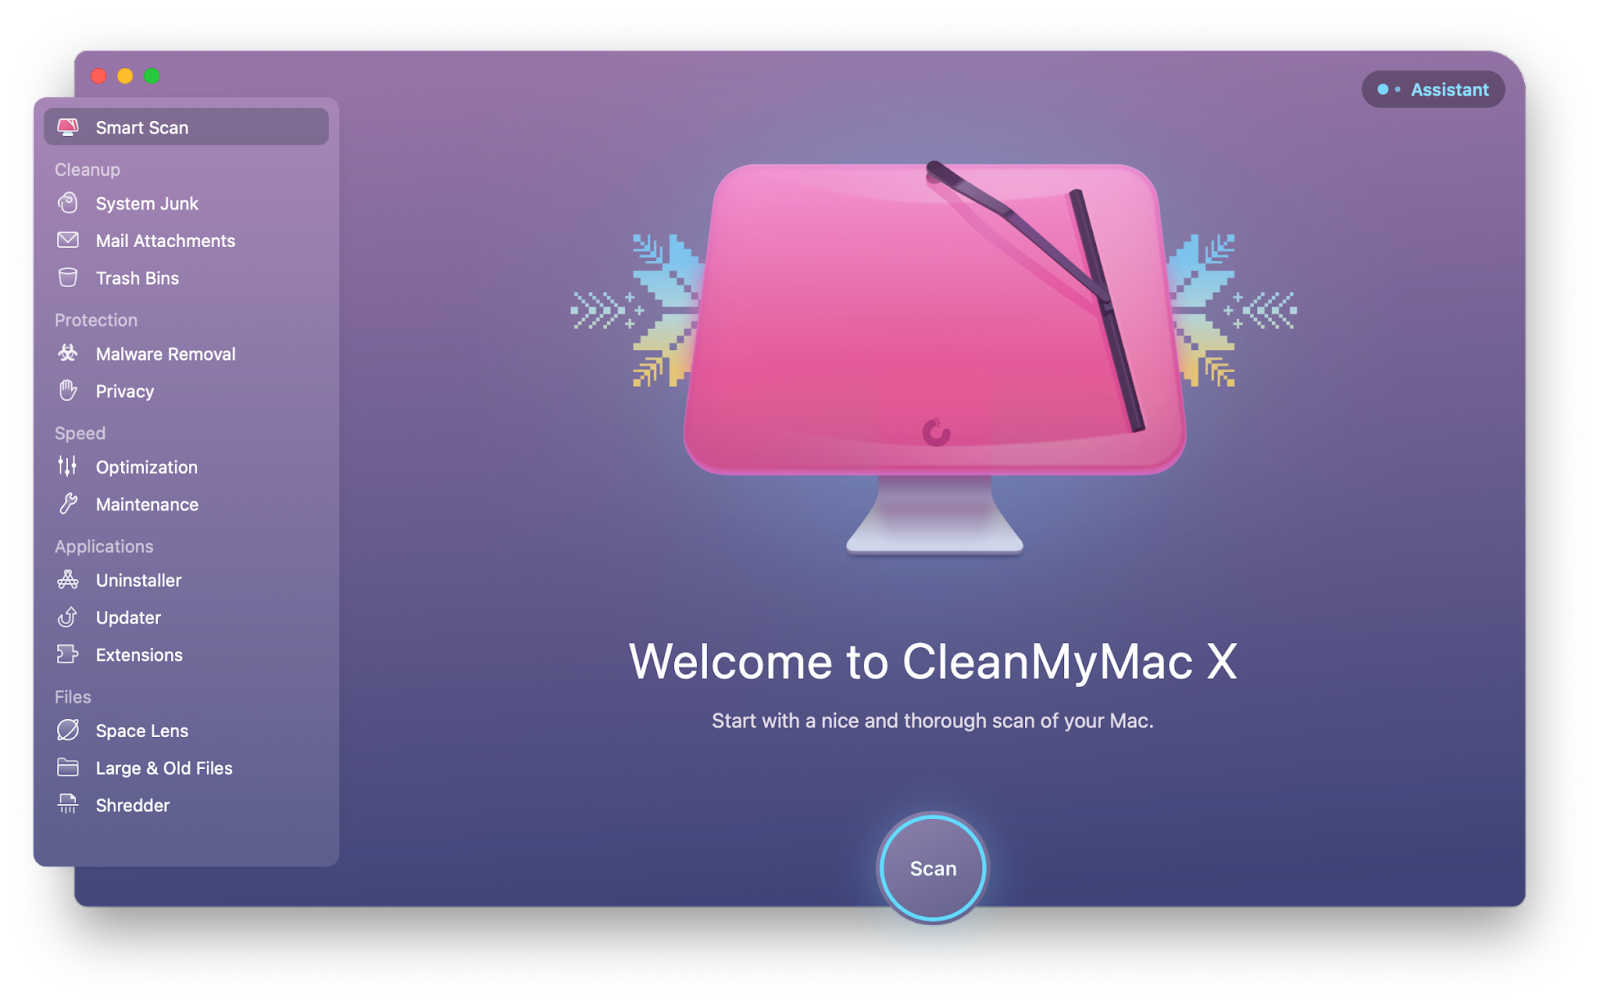 cleanmymac x interface